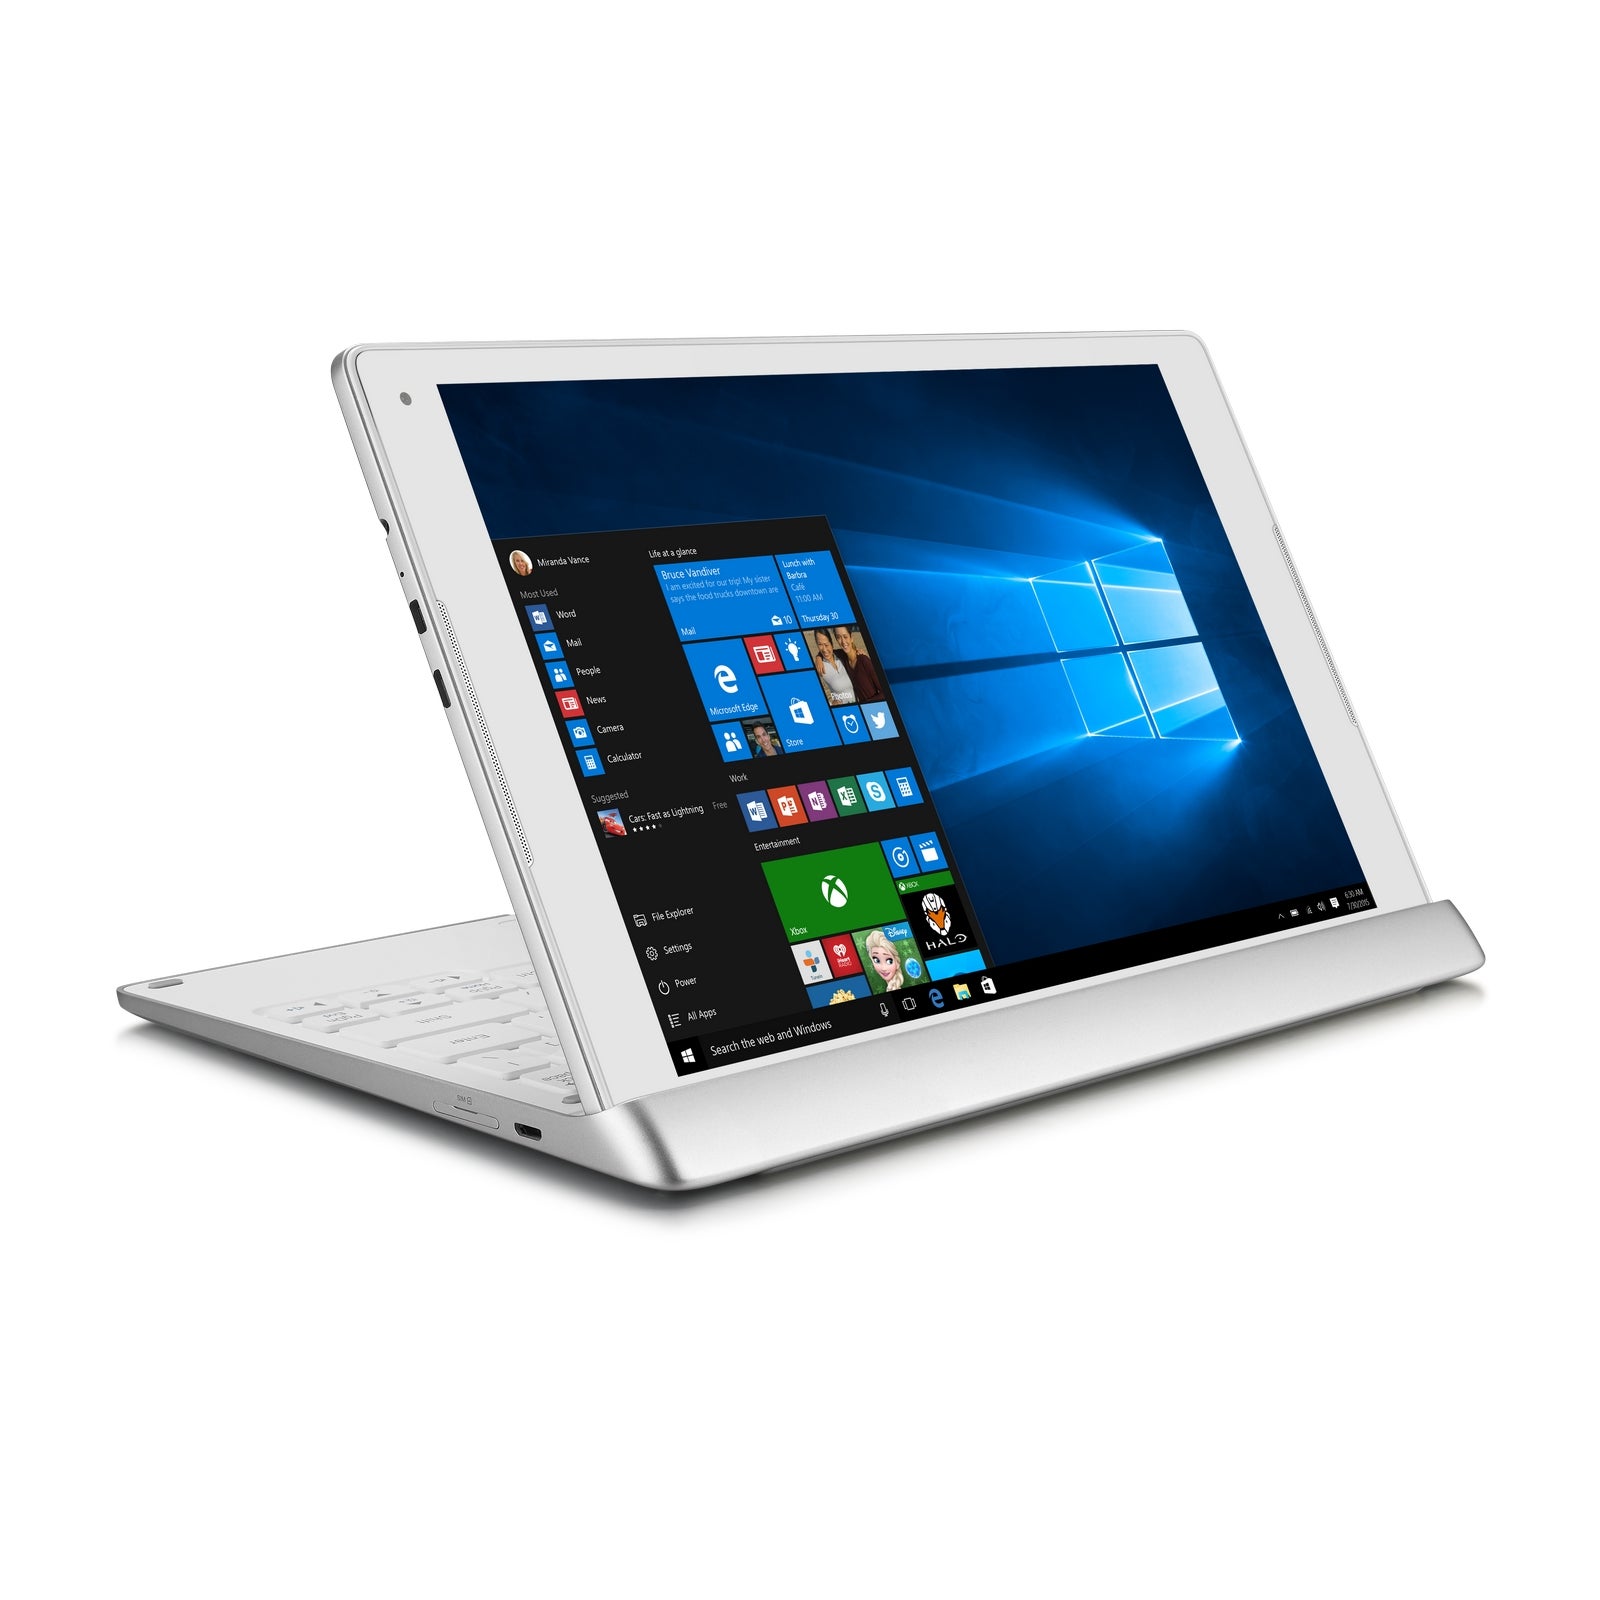 Alcatel PLUS 10 in Dock mode - Alcatel unveils the PLUS 10: the multimedia consumer's Windows 10 laptop-tablet hybrid